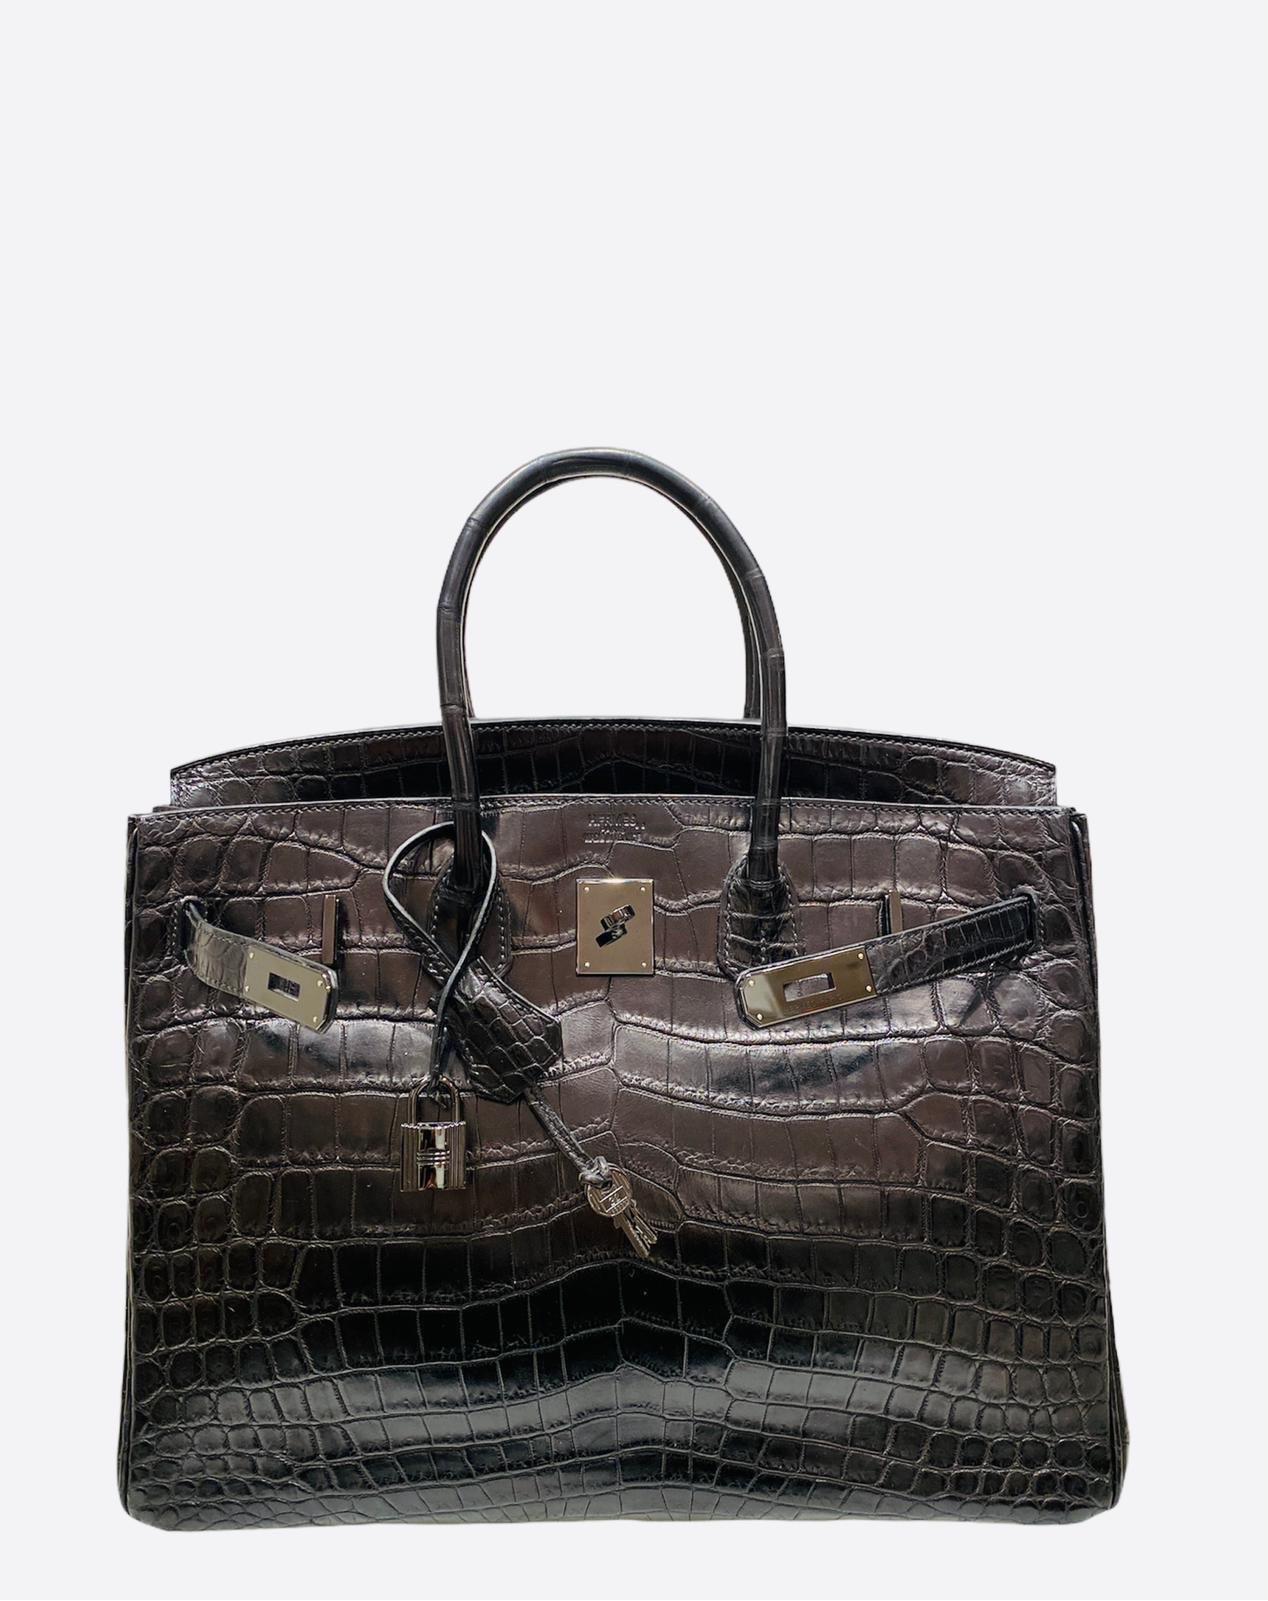 Hermes Limited Edition 35cm Matte So Black Nilo Crocodile Birkin, 2010 For Sale 6